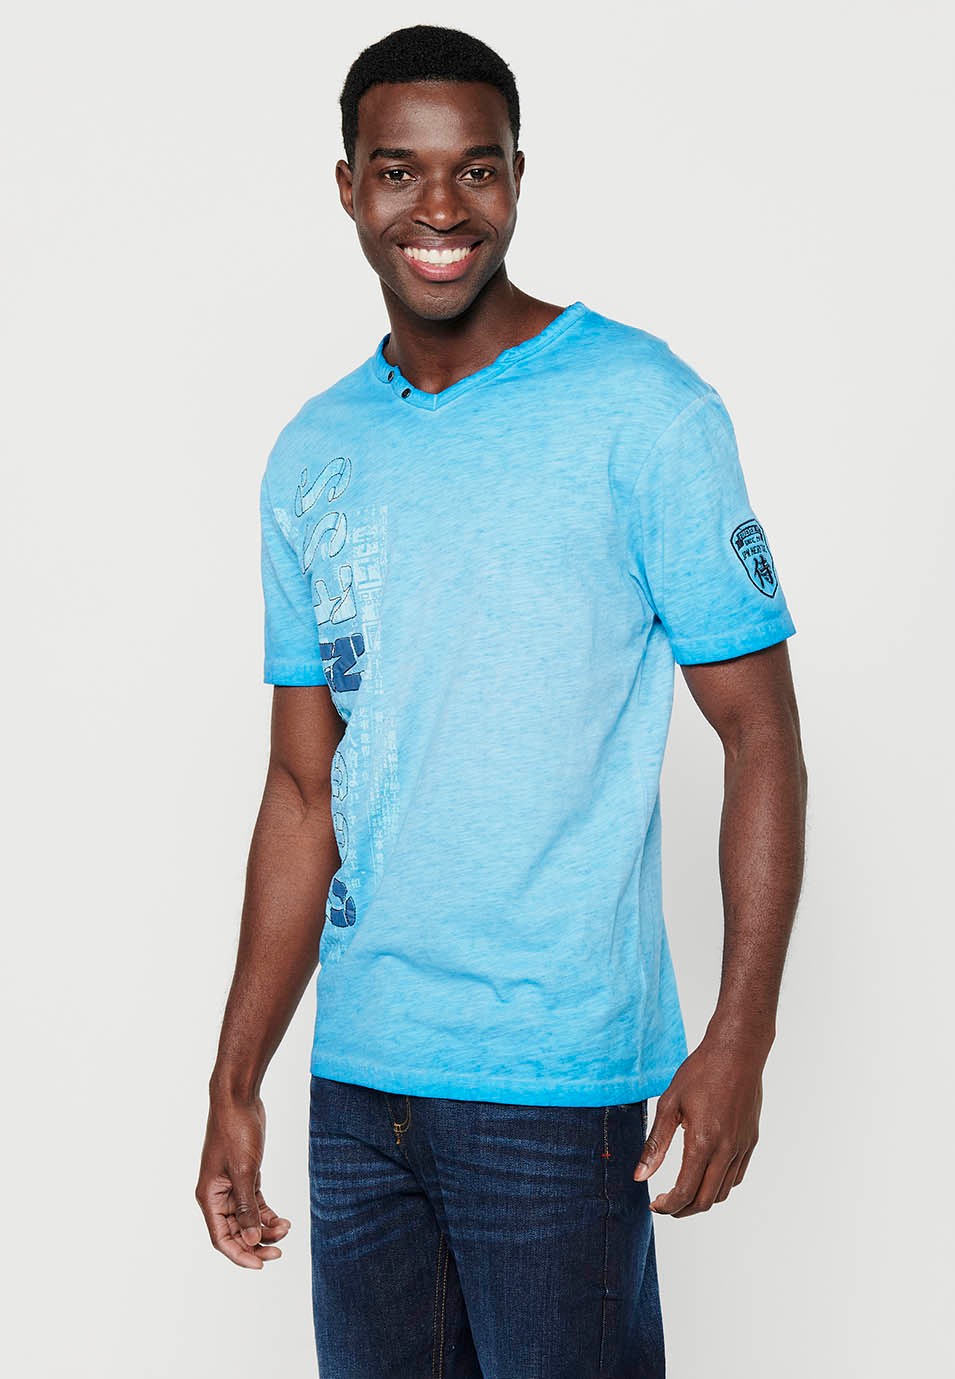 Short-sleeved cotton t-shirt, V-neck with button decoration, blue color for men 1